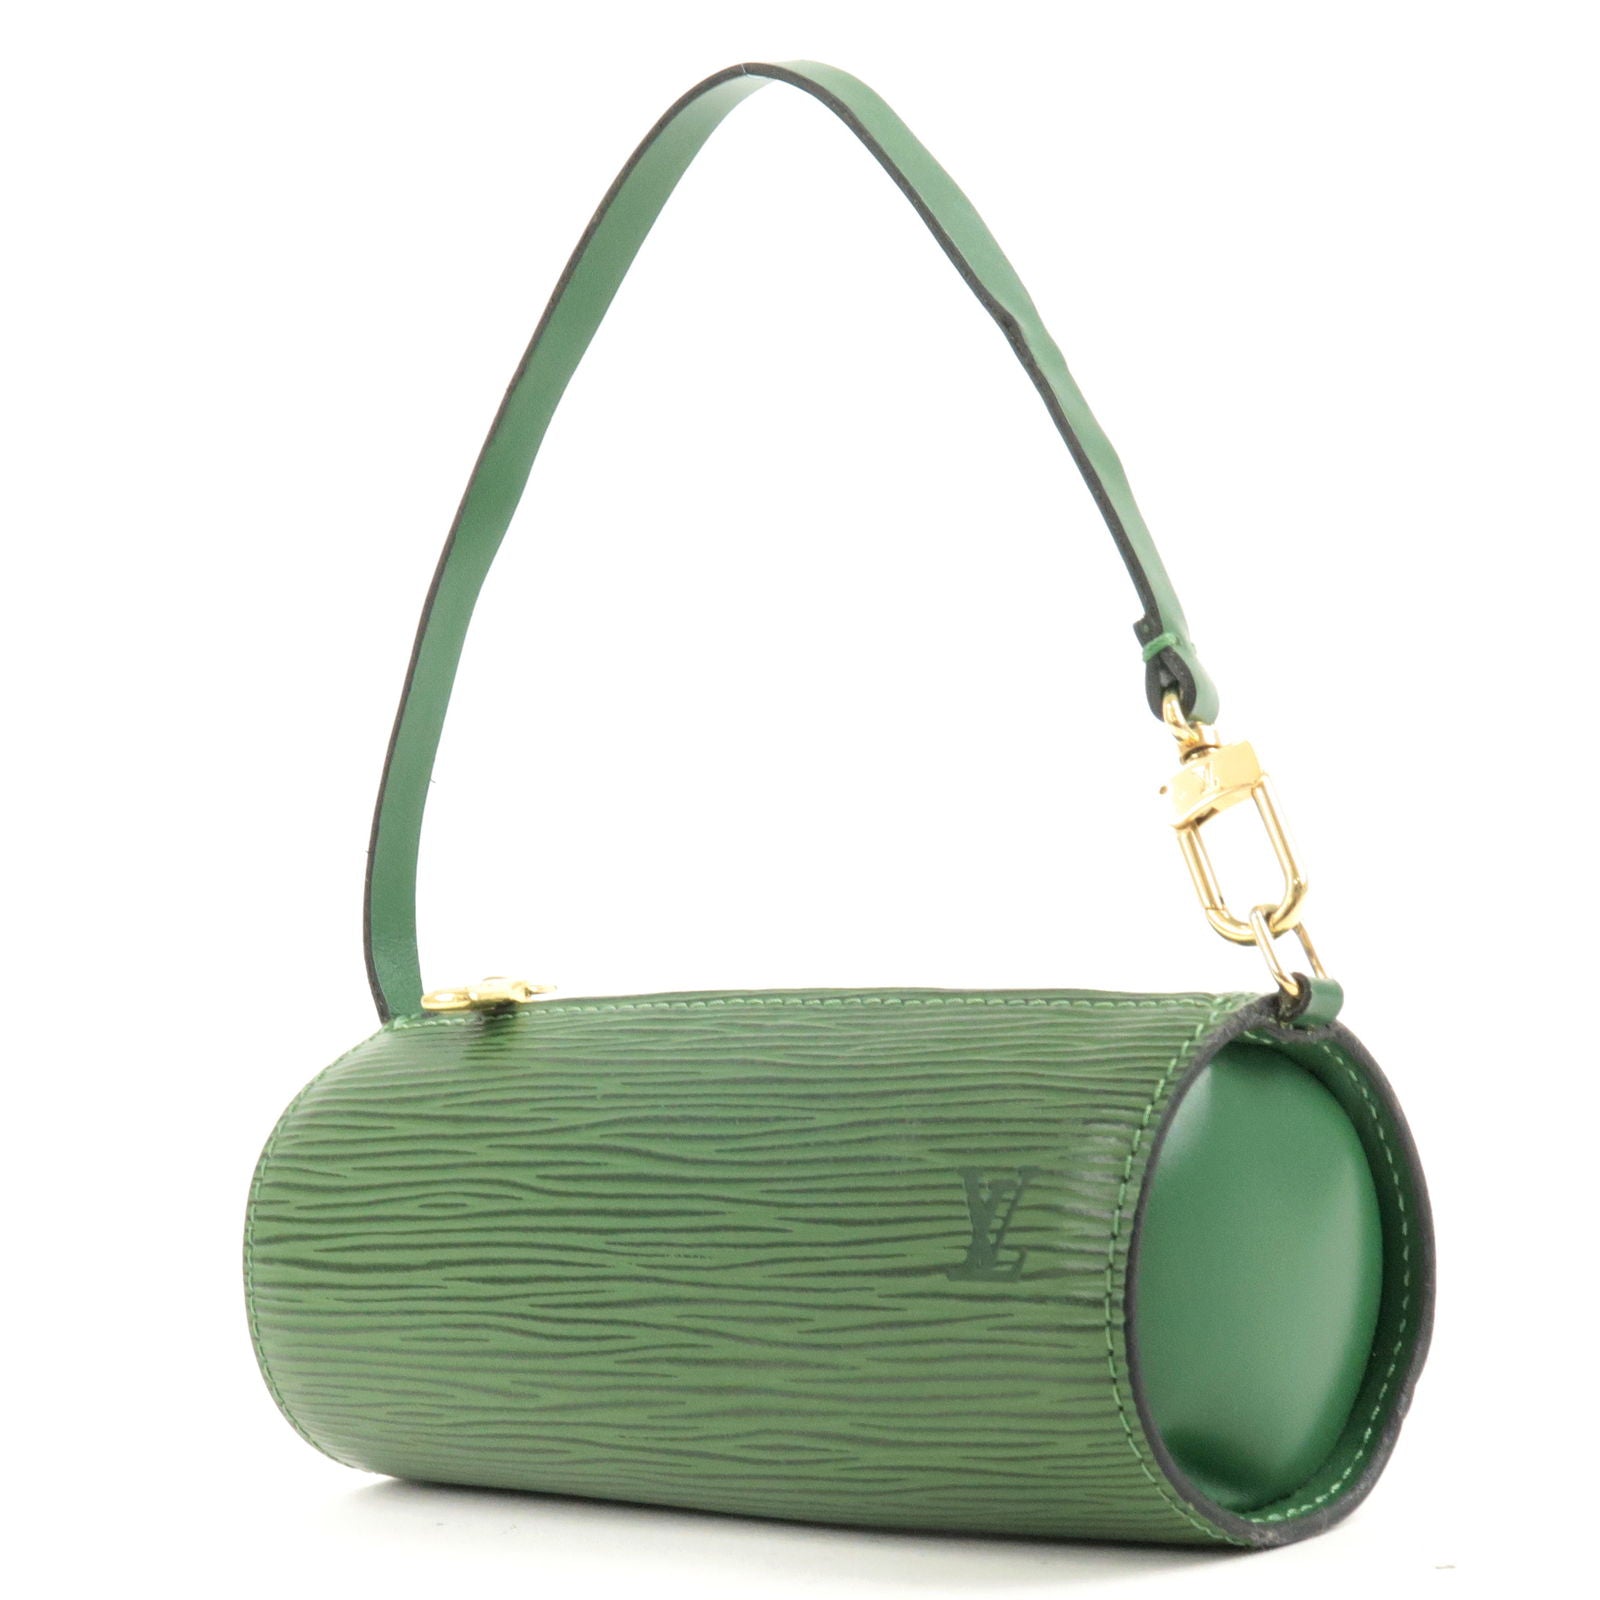 Shop for Louis Vuitton Green Epi Leather Soufflot Shoulder Bag